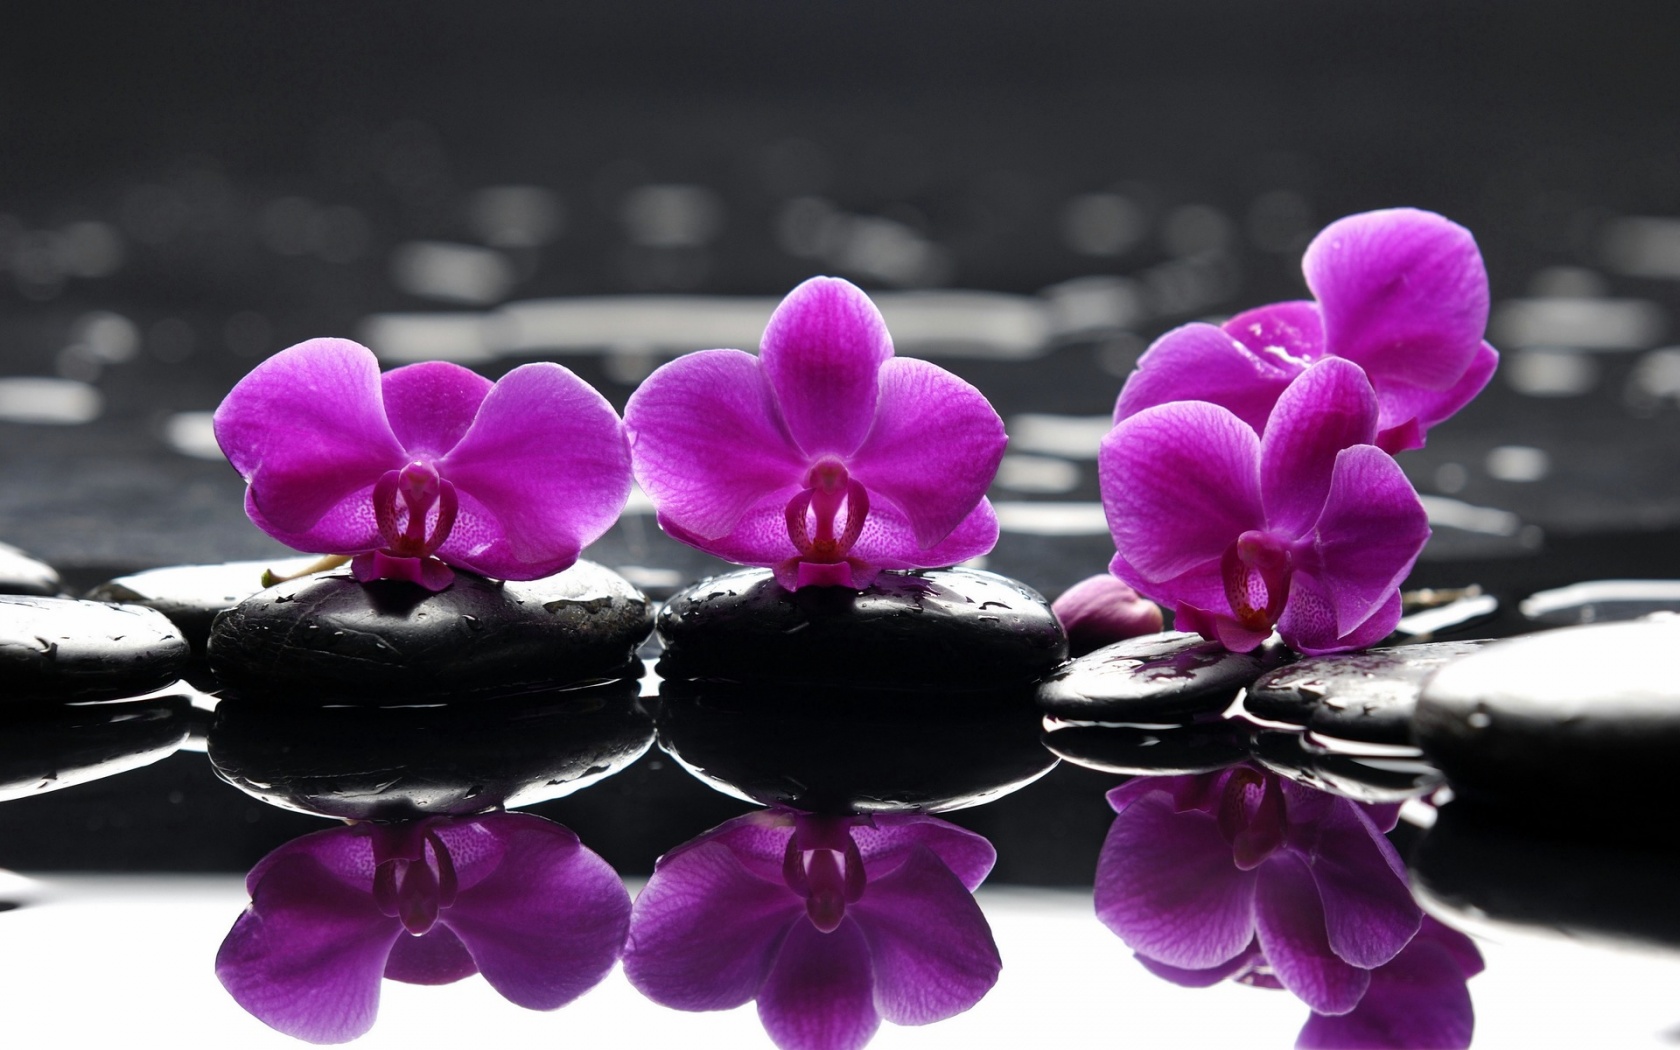 Spa Stones Purple Flower Droplets Reflection